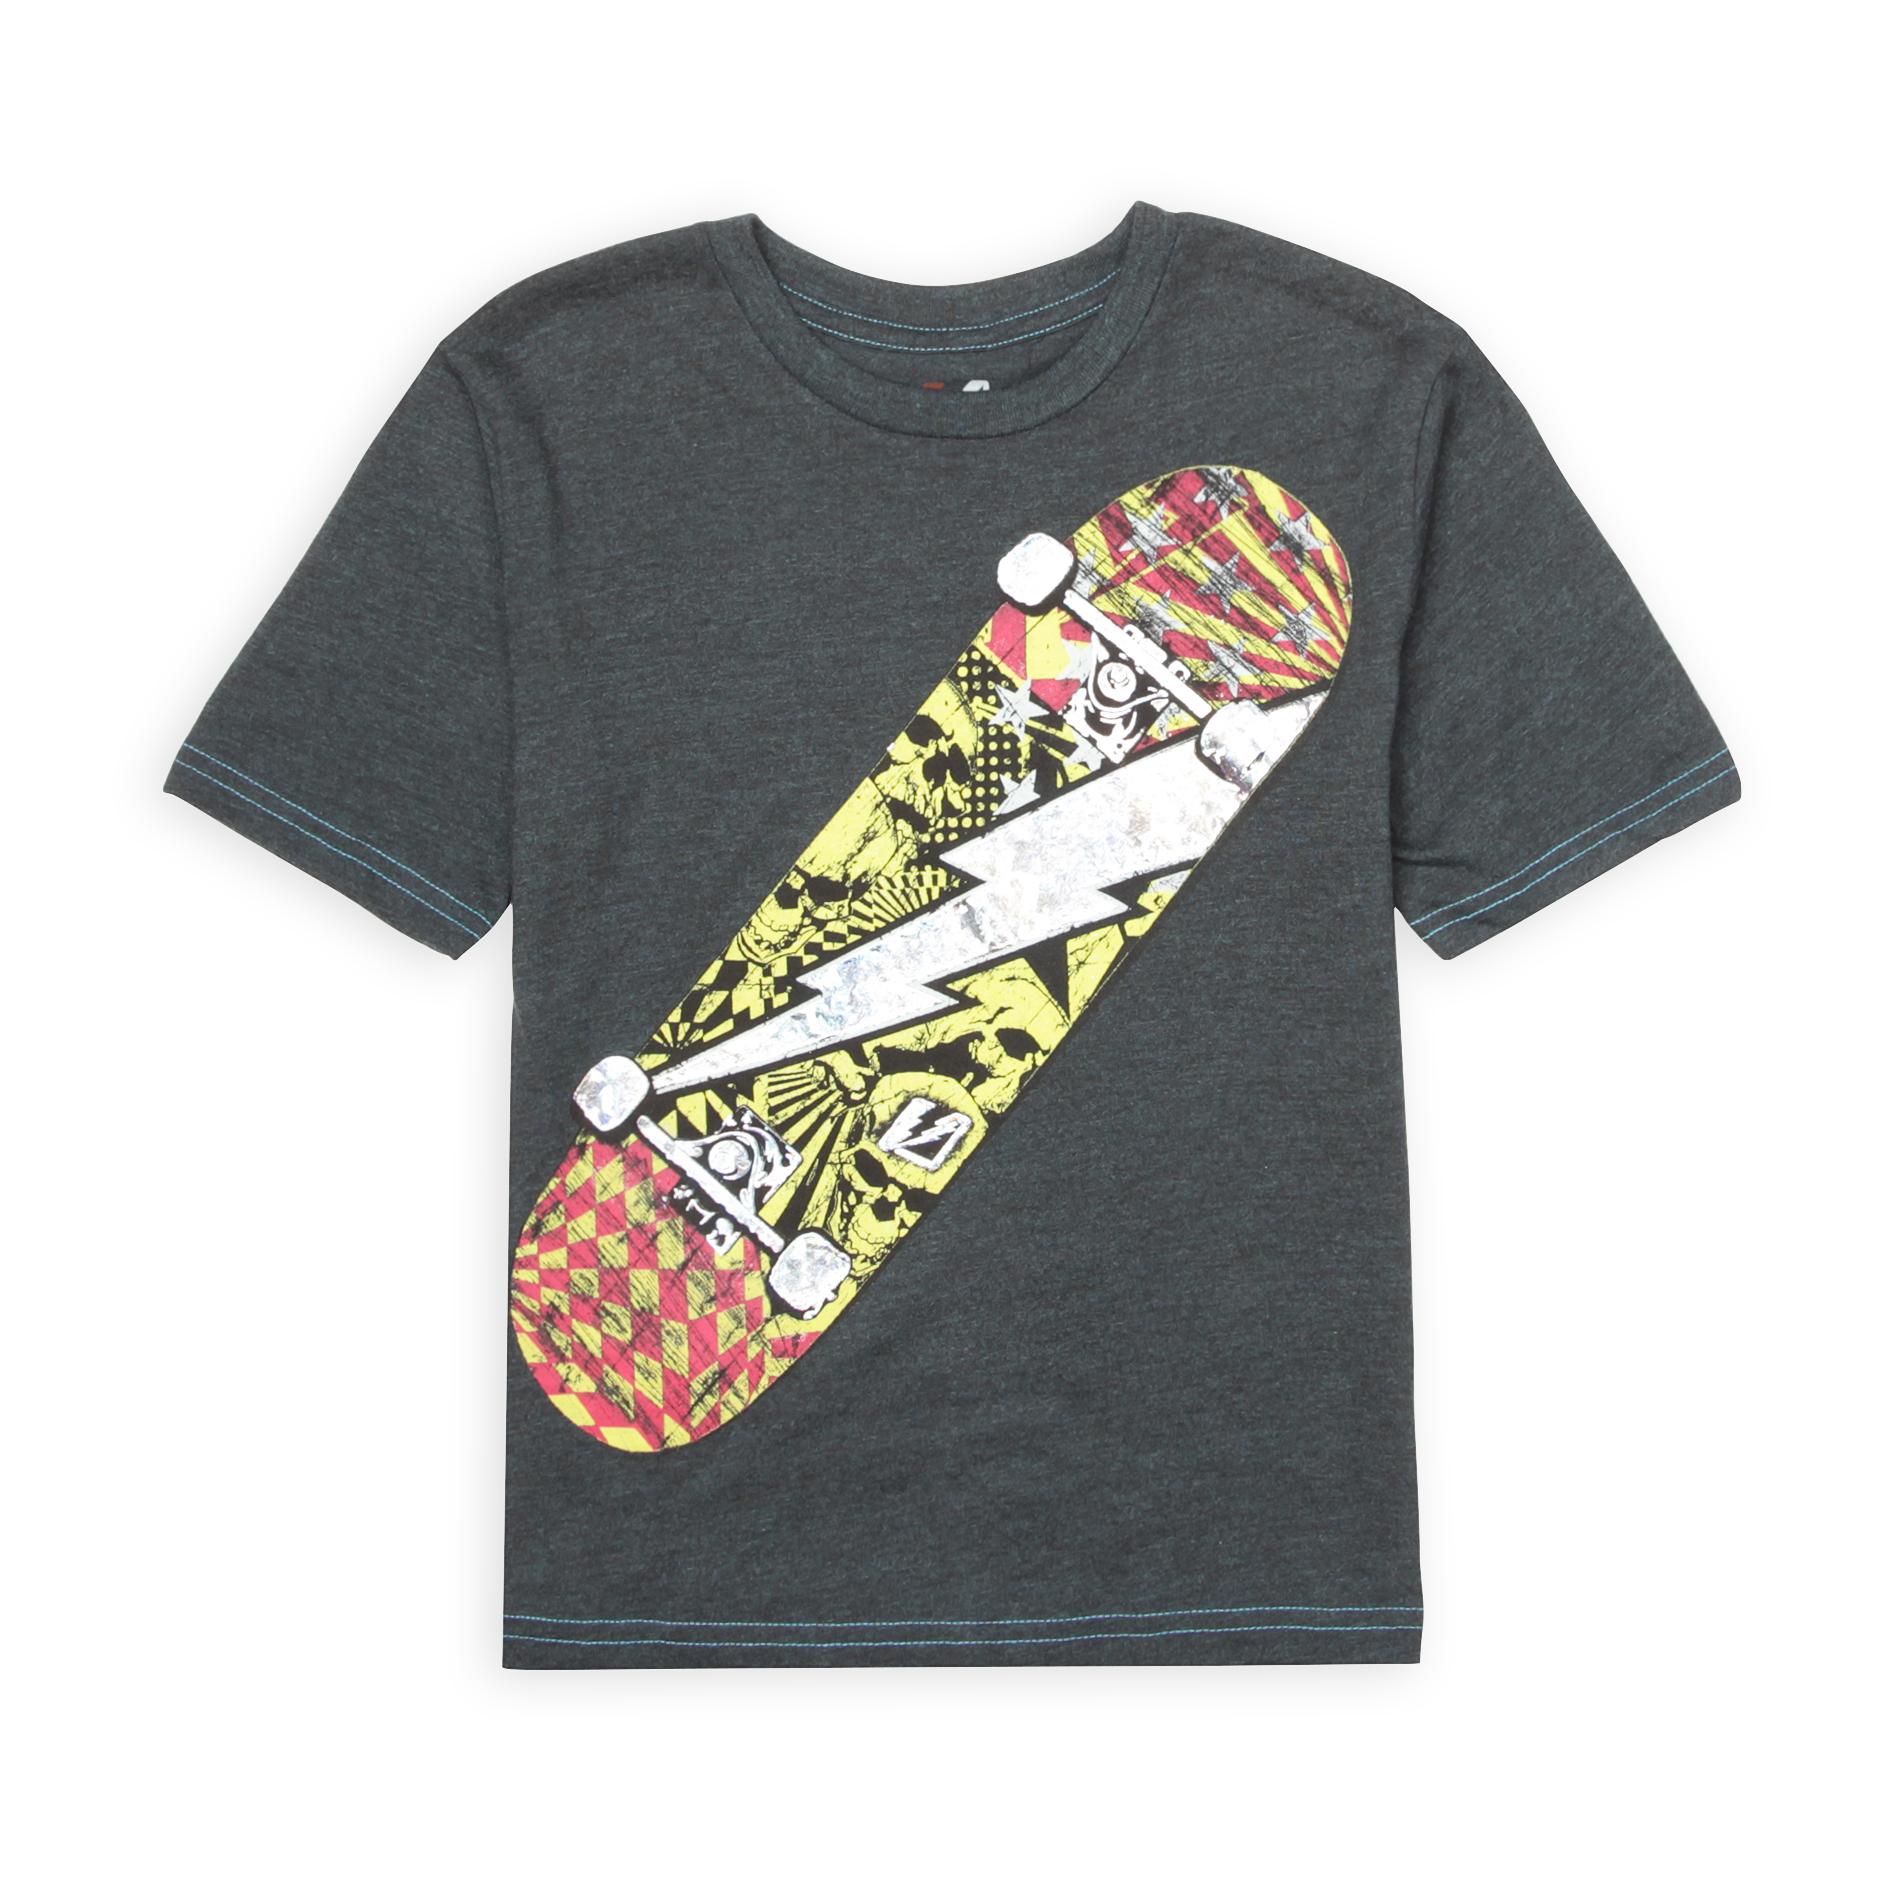 Amplify Boy's Graphic T-Shirt - Skateboard